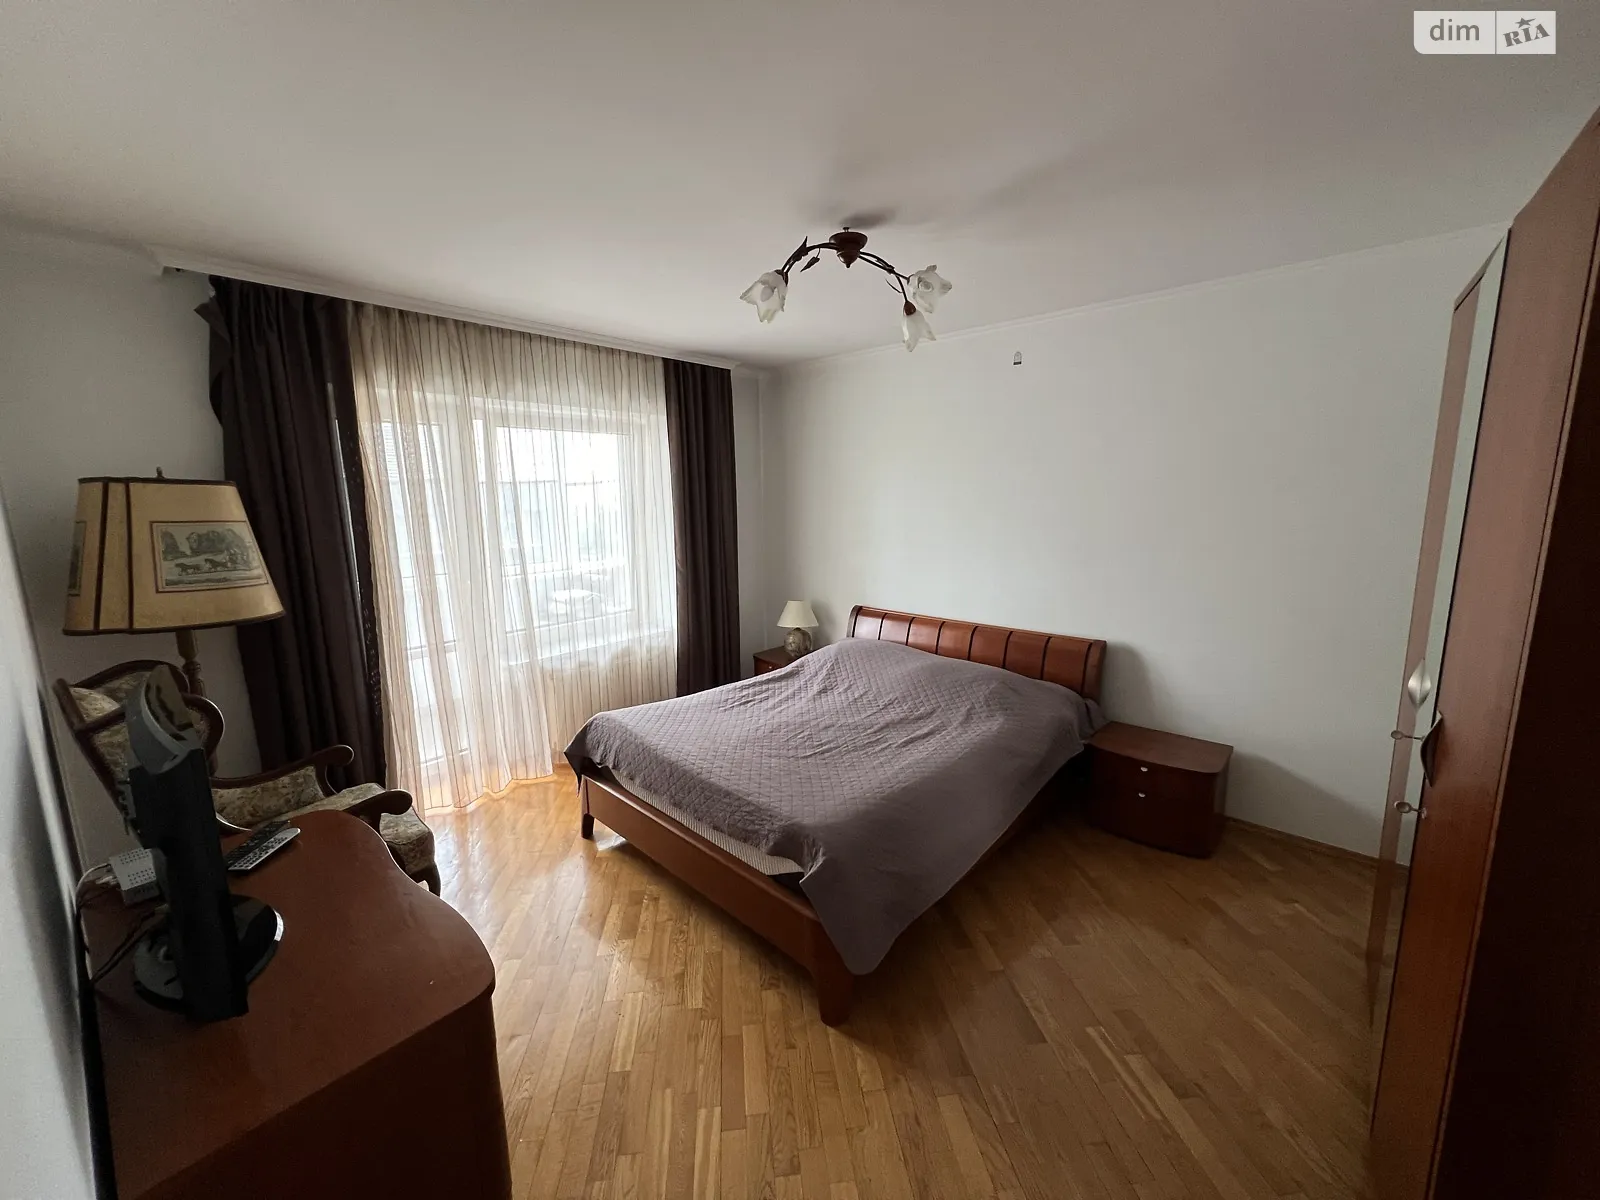 3-кімнатна квартира 110 кв. м у Луцьку - фото 4